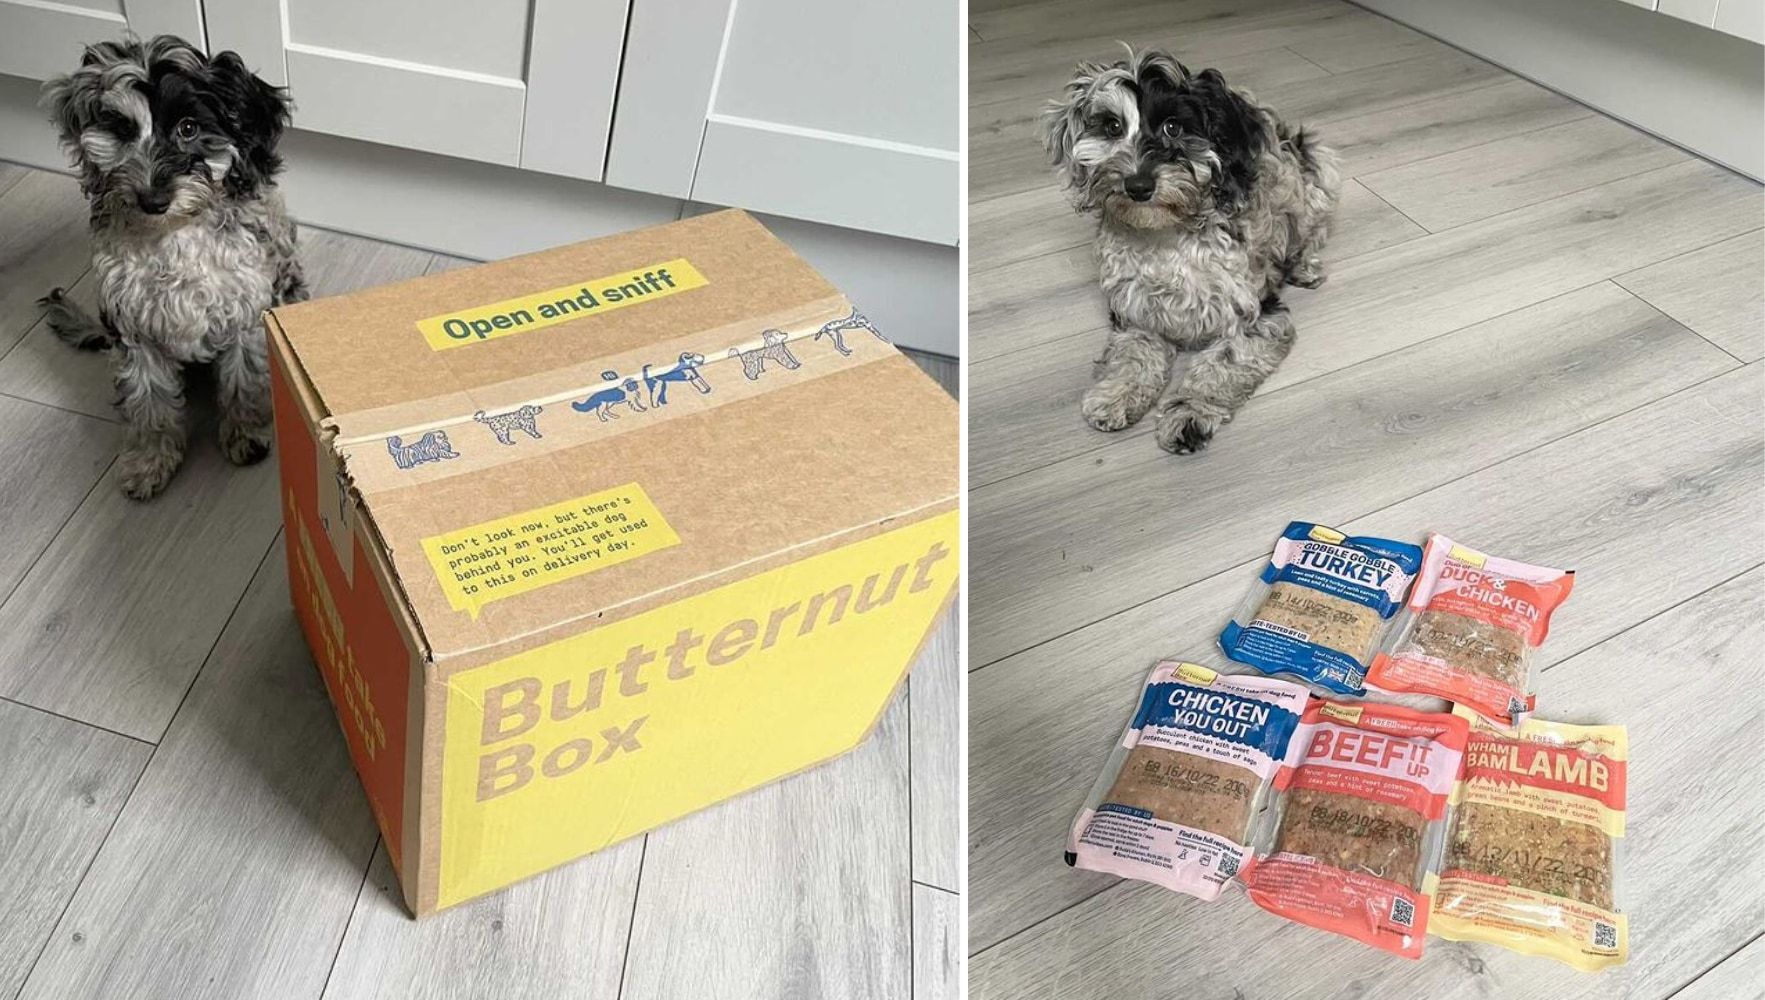 Butternut Box dog food meal preparation